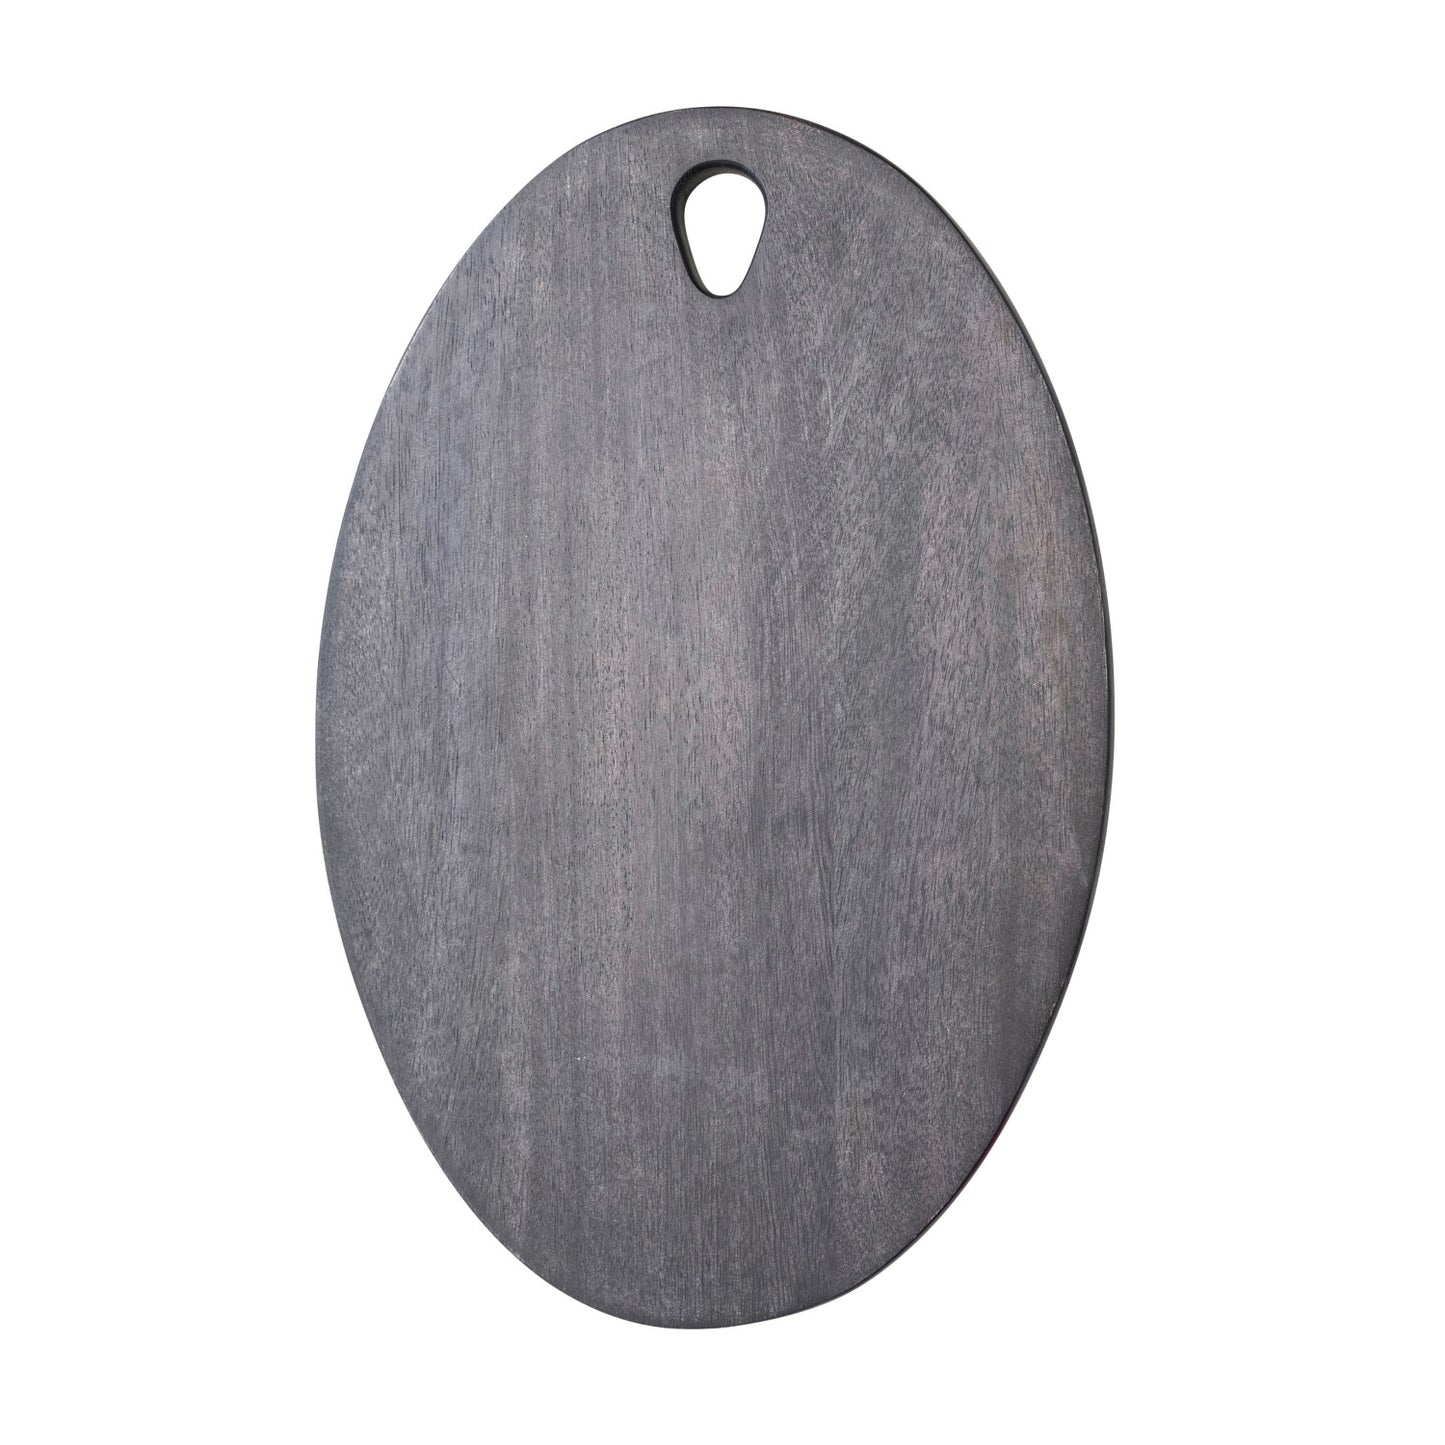 Oval Dark Wood Cheese Board